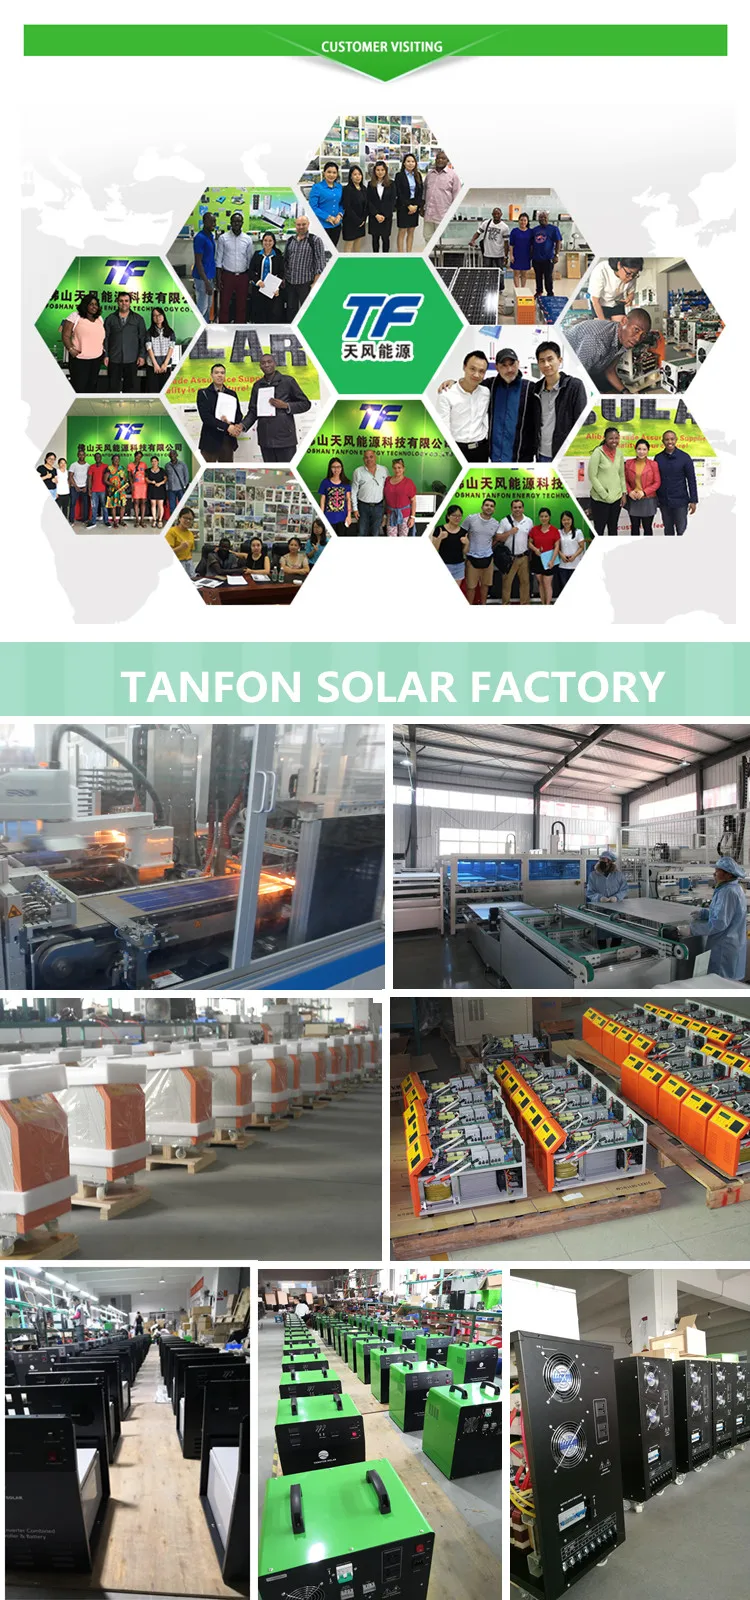 Tanfon Solar Factory